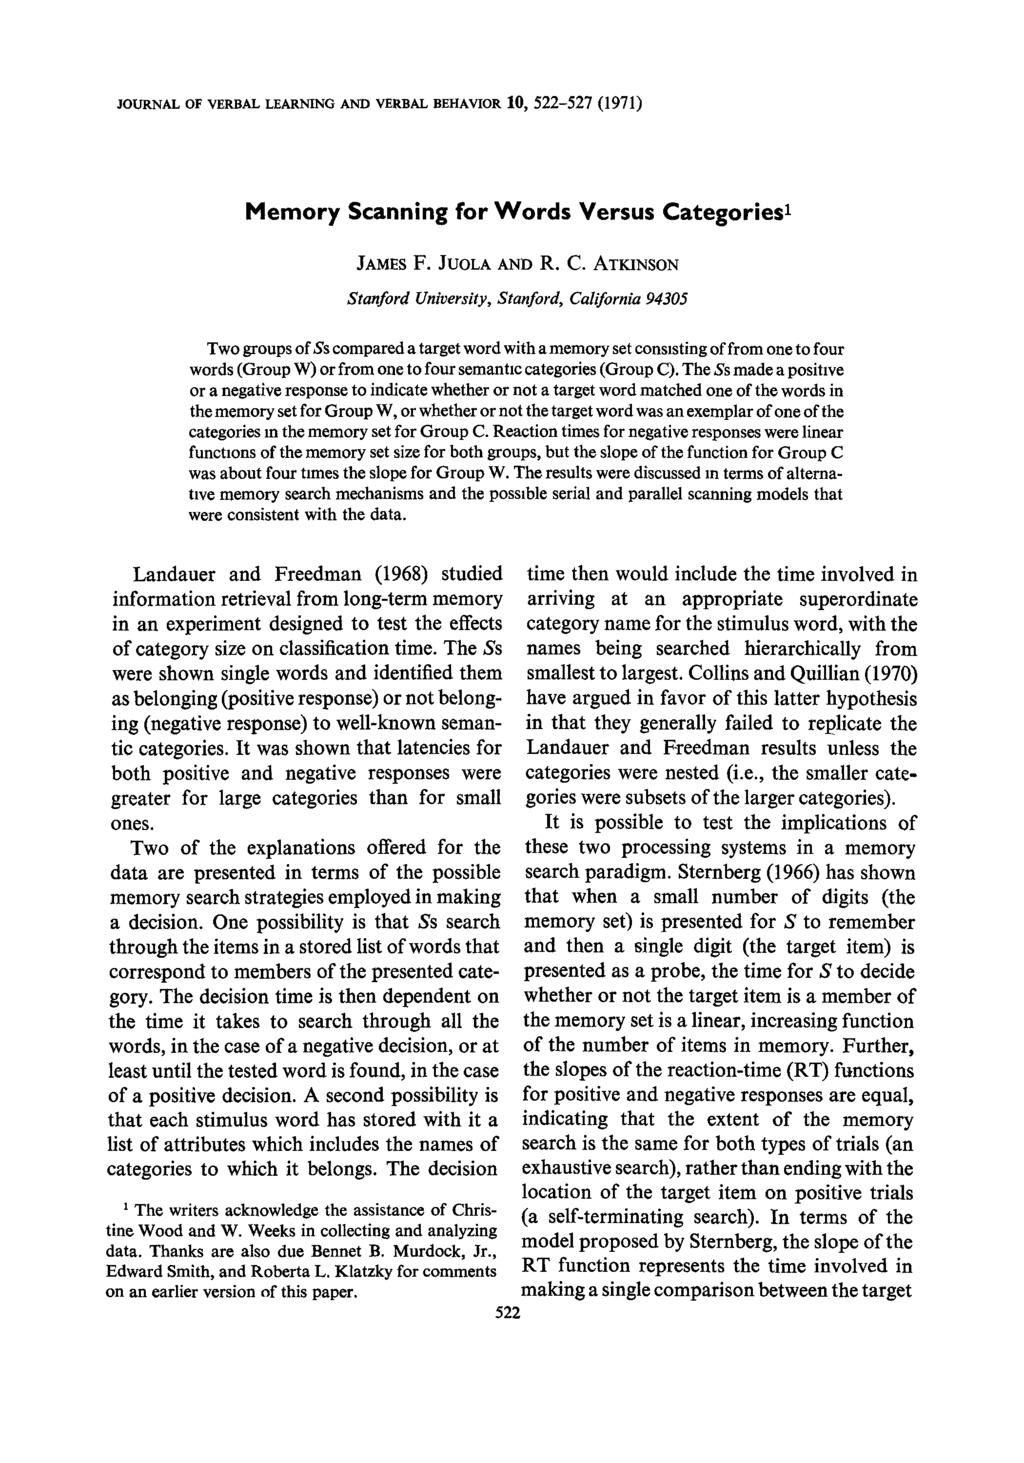 JOURNAL OF VERBAL LEARNING AND VERBAL BEHAVIOR 10, 522-527 (1971) Memory Scanning for Words Versus Ca